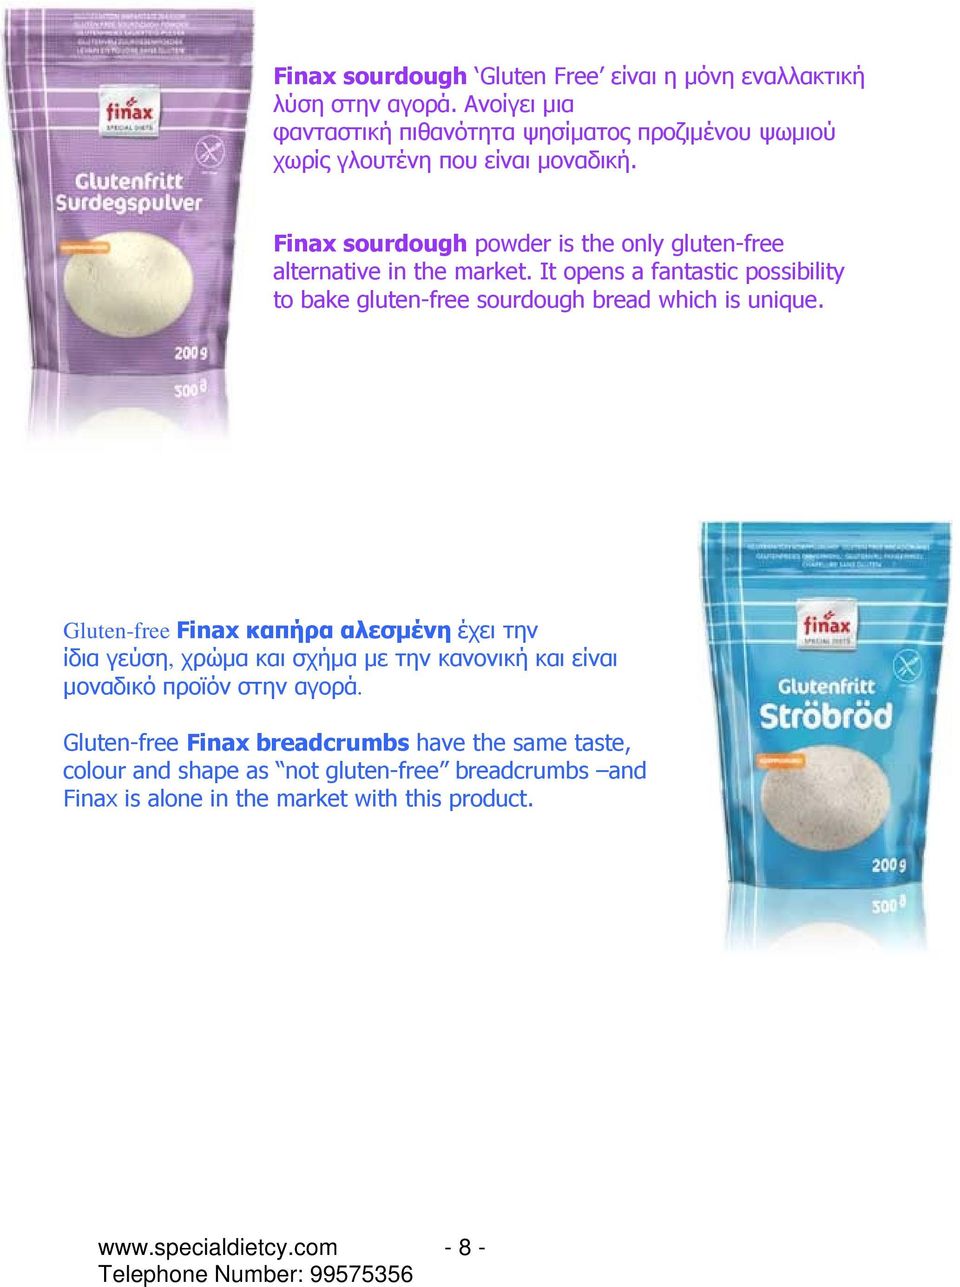 Finax sourdough powder is the only gluten-free alternative in the market.